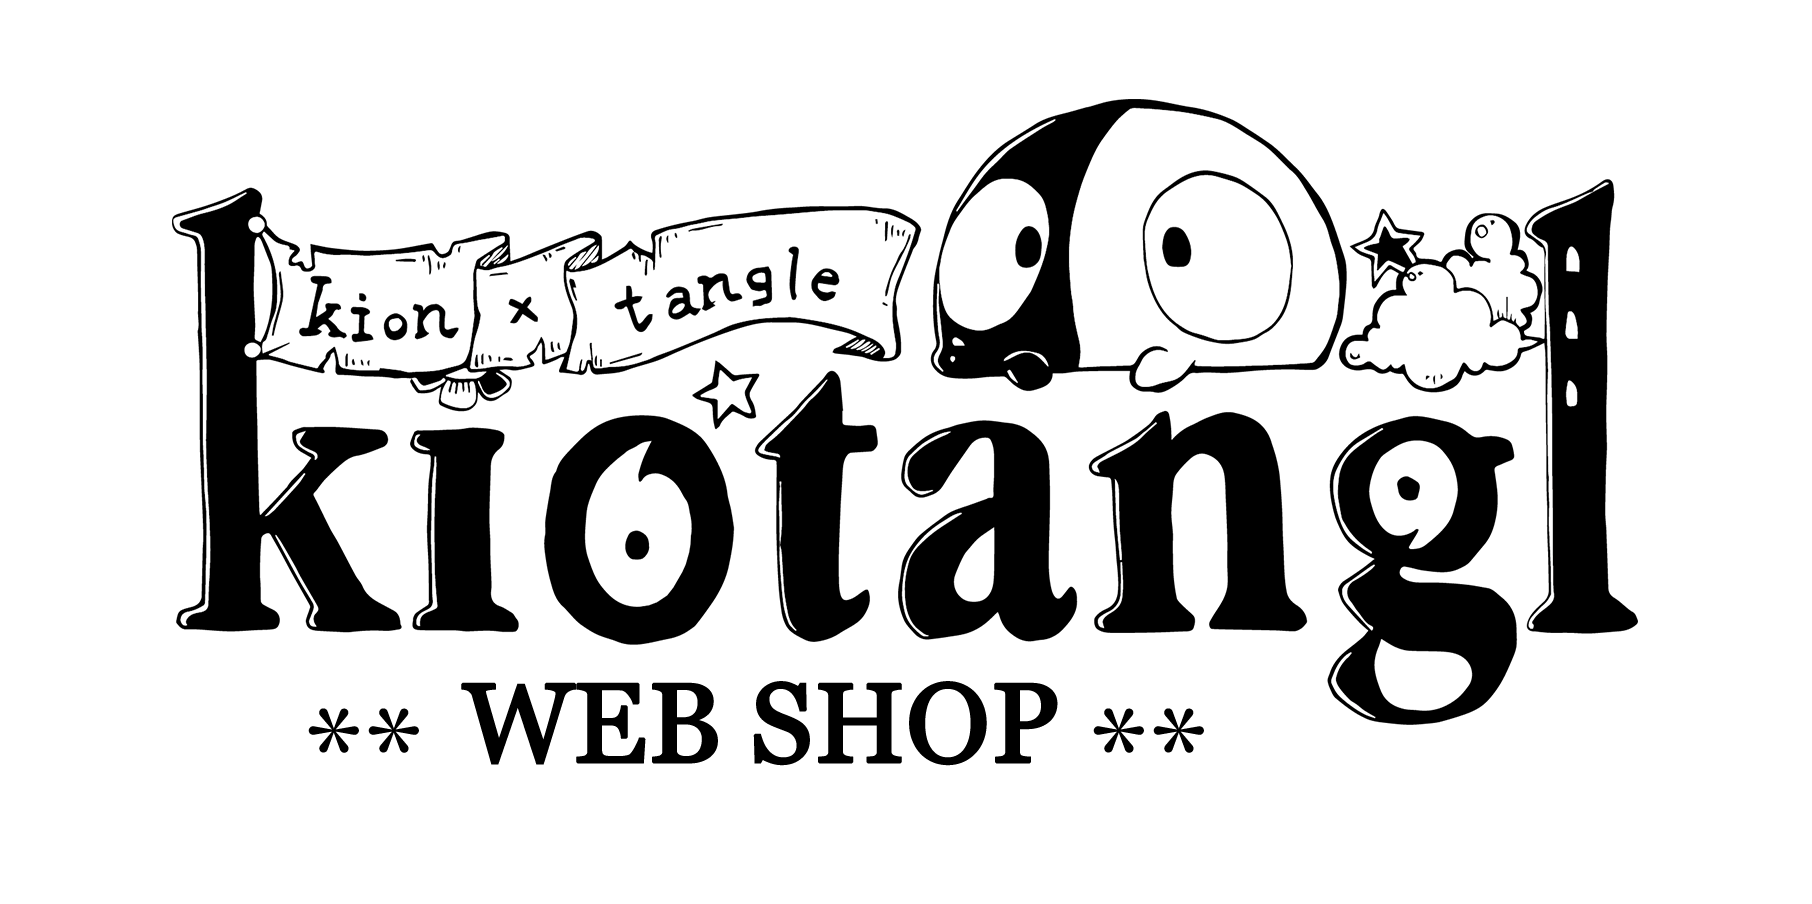 kiotangl web shop